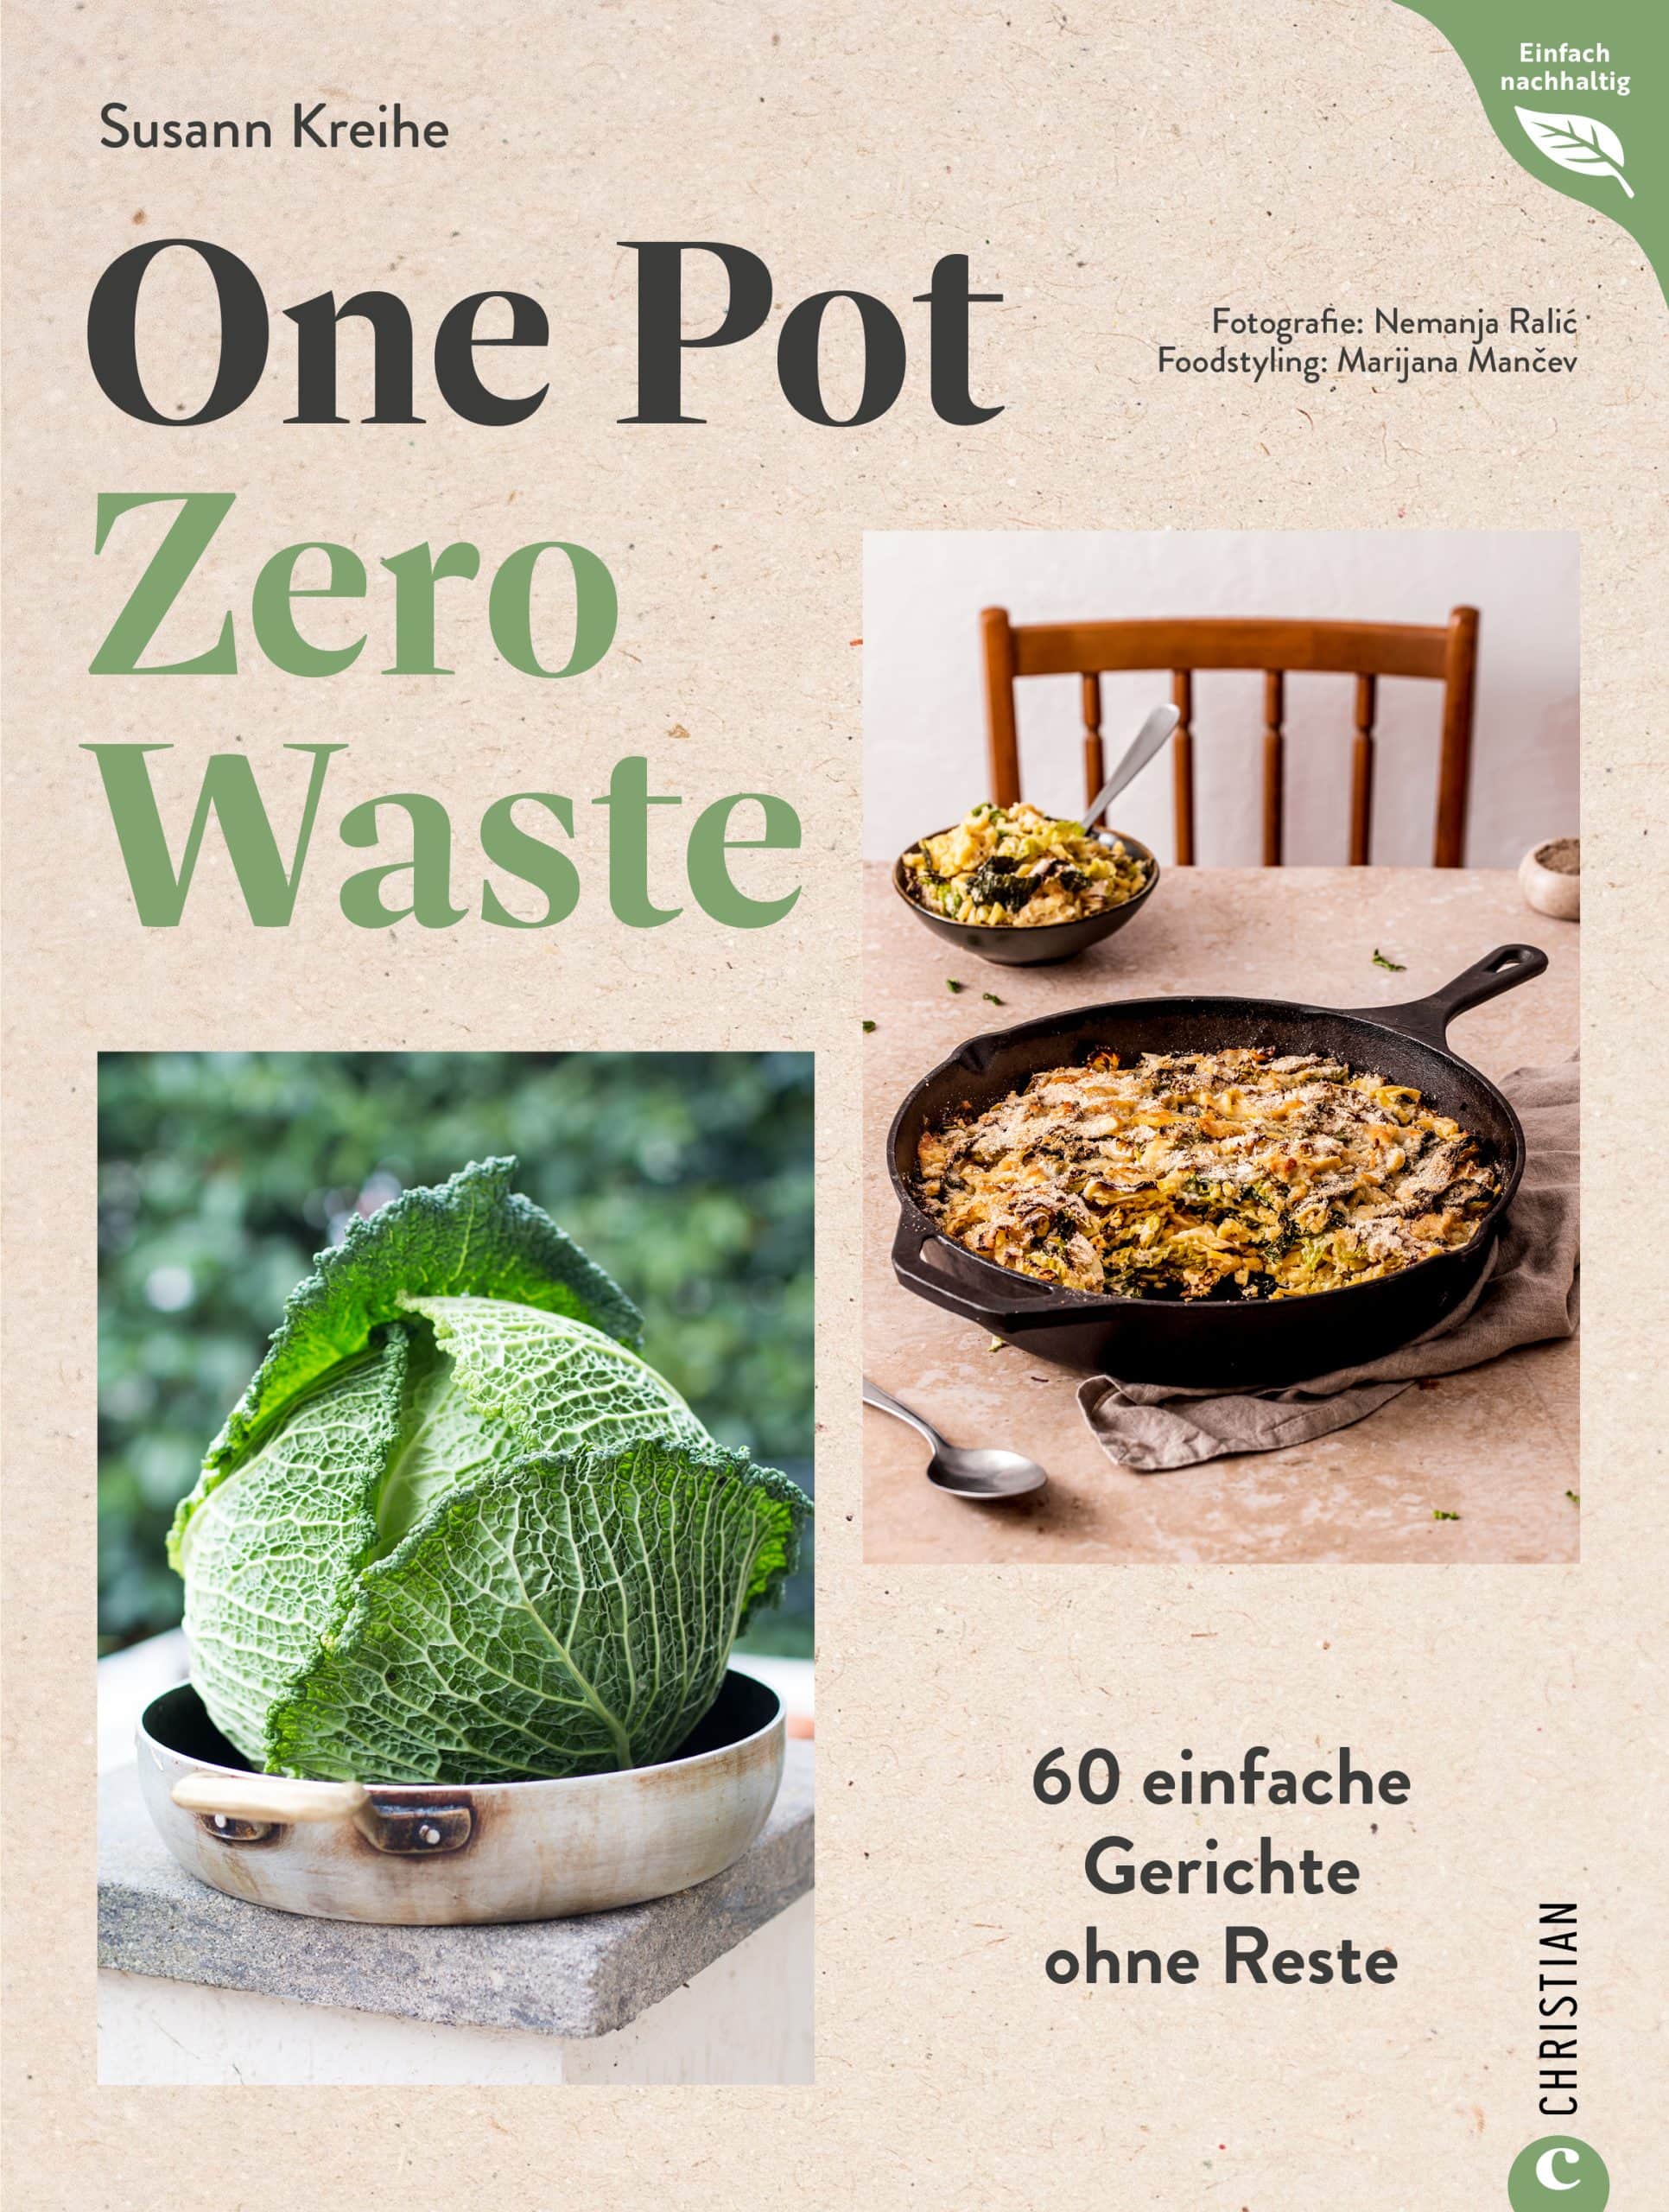 Brokkoli-Orechiette Aus One Pot Zero Waste // Himbeer